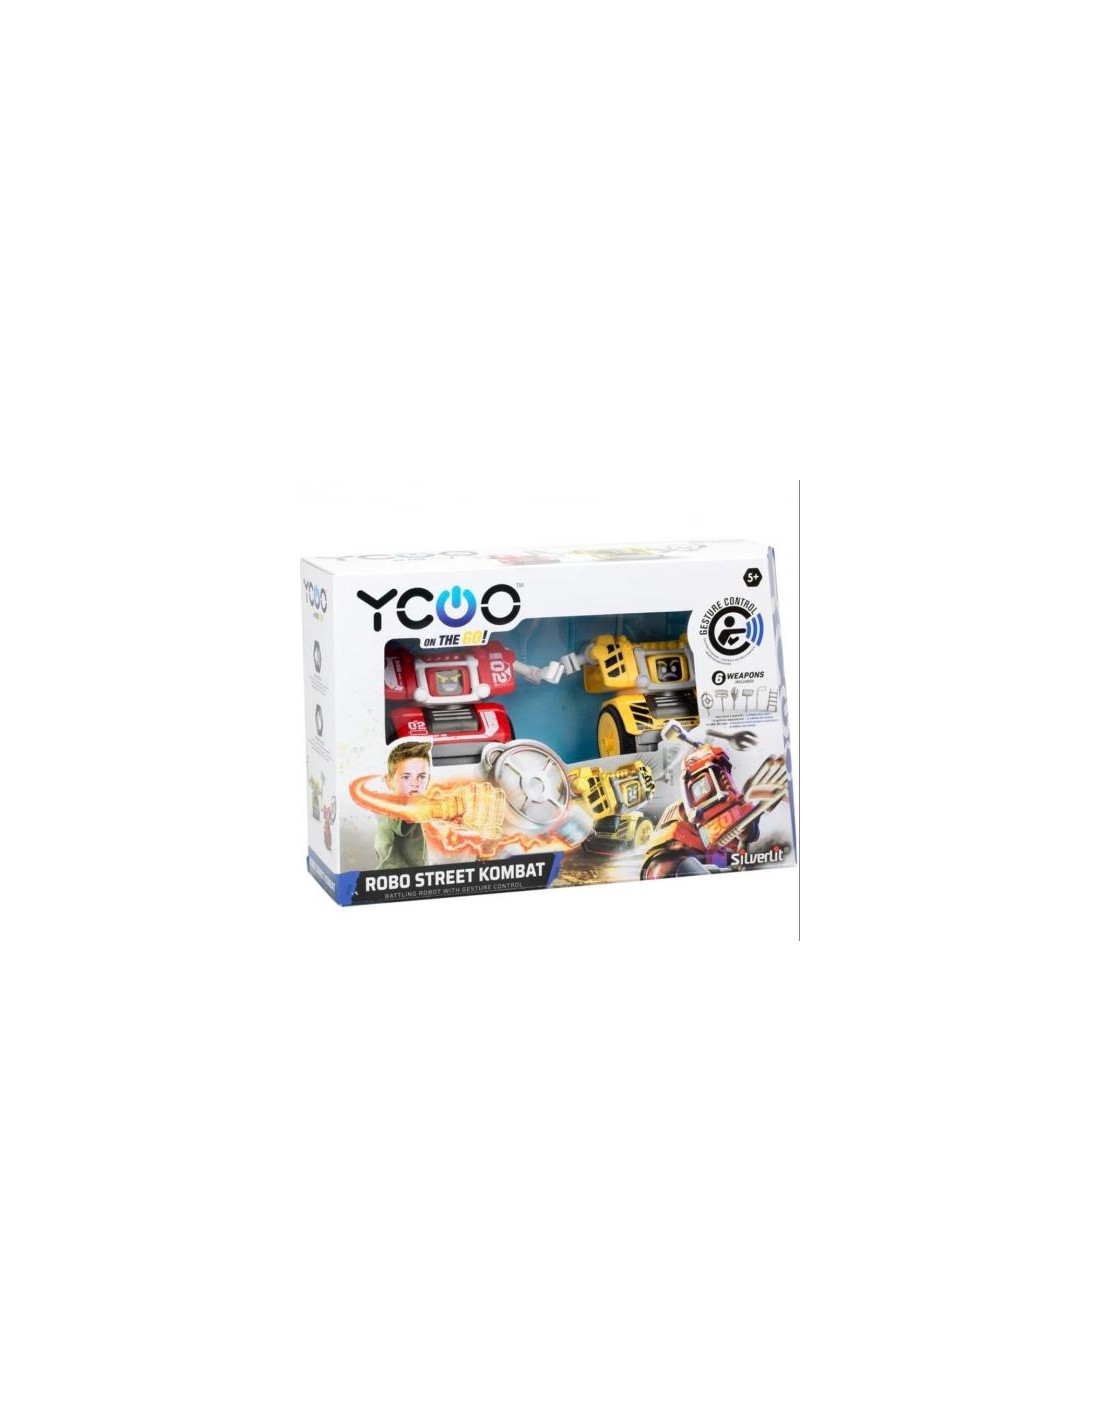 Ycoo Robo Street Kombat double pack